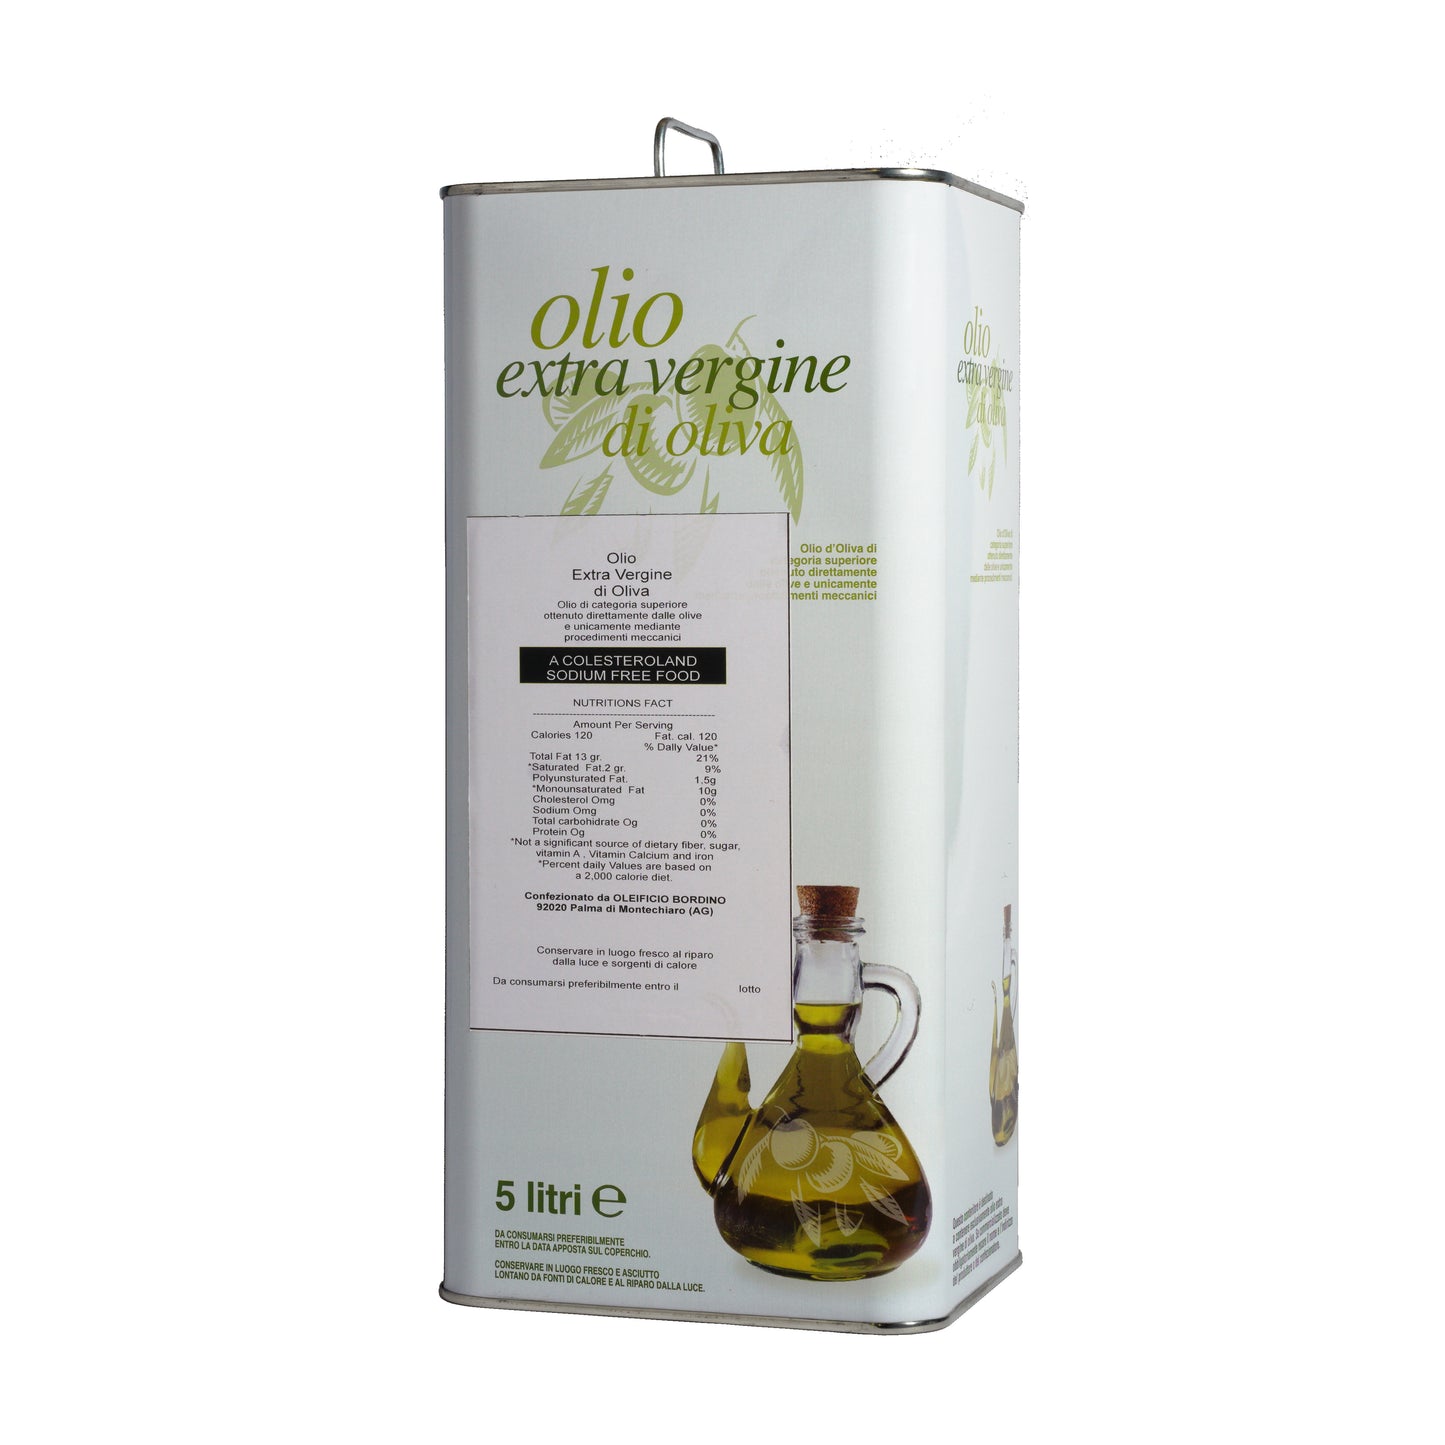 Olio Extravergine di Oliva Siciliano Premium - Latta da 5 L | Oleificio Bordino